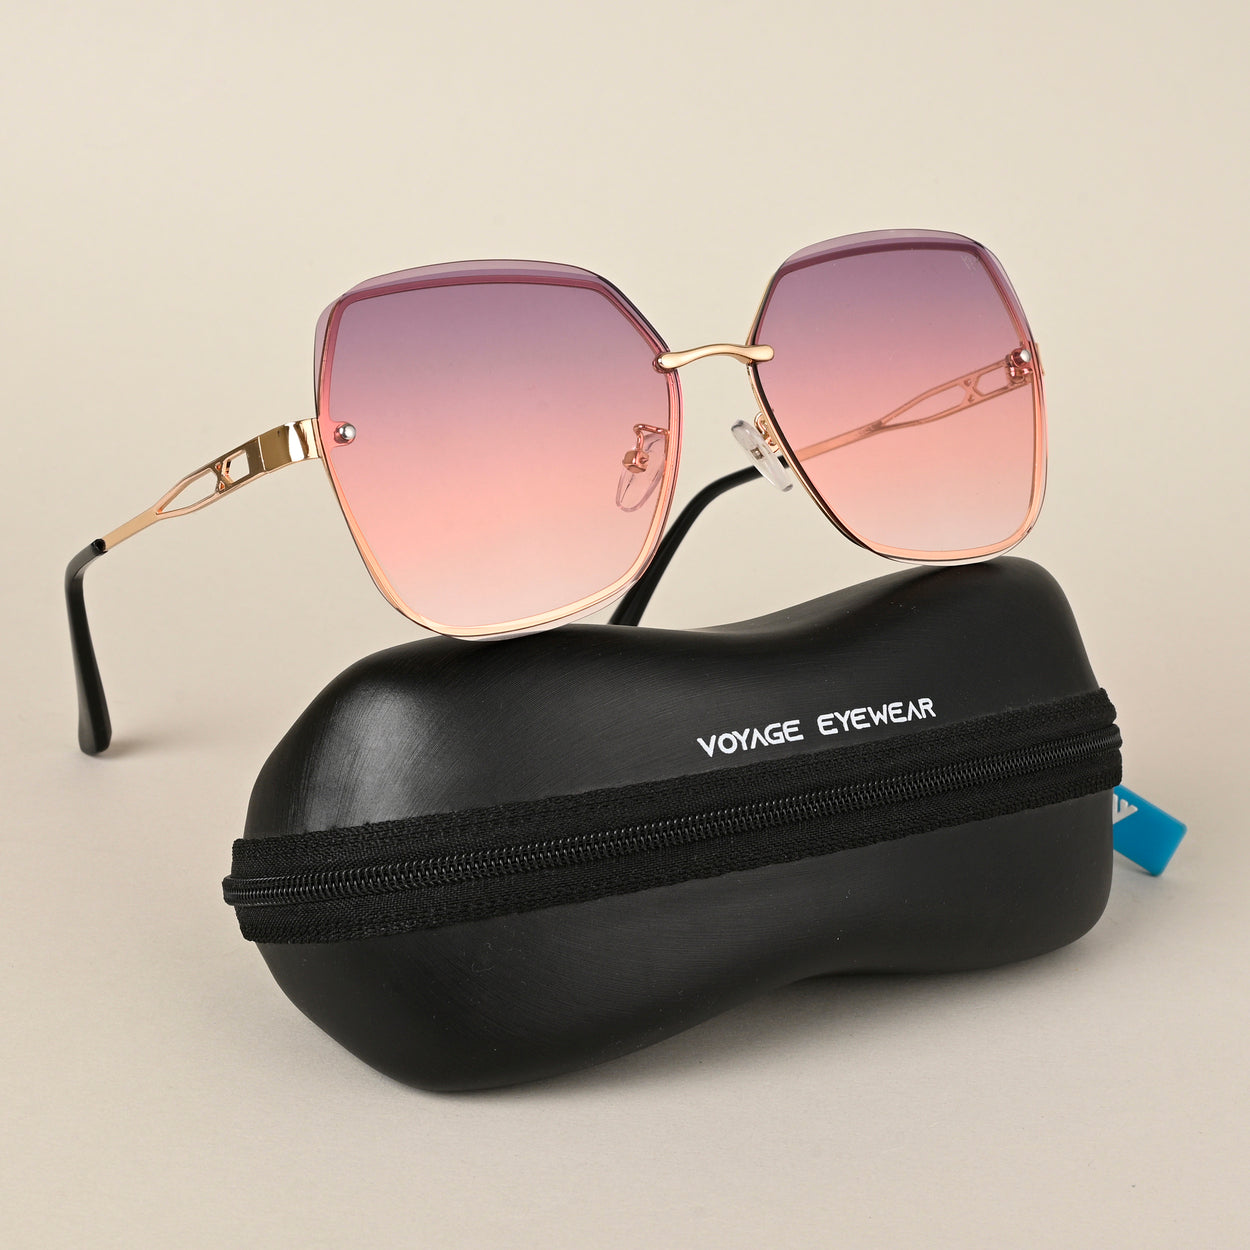 Voyage Pink & Purple Oversize Sunglasses for Women - MG4320